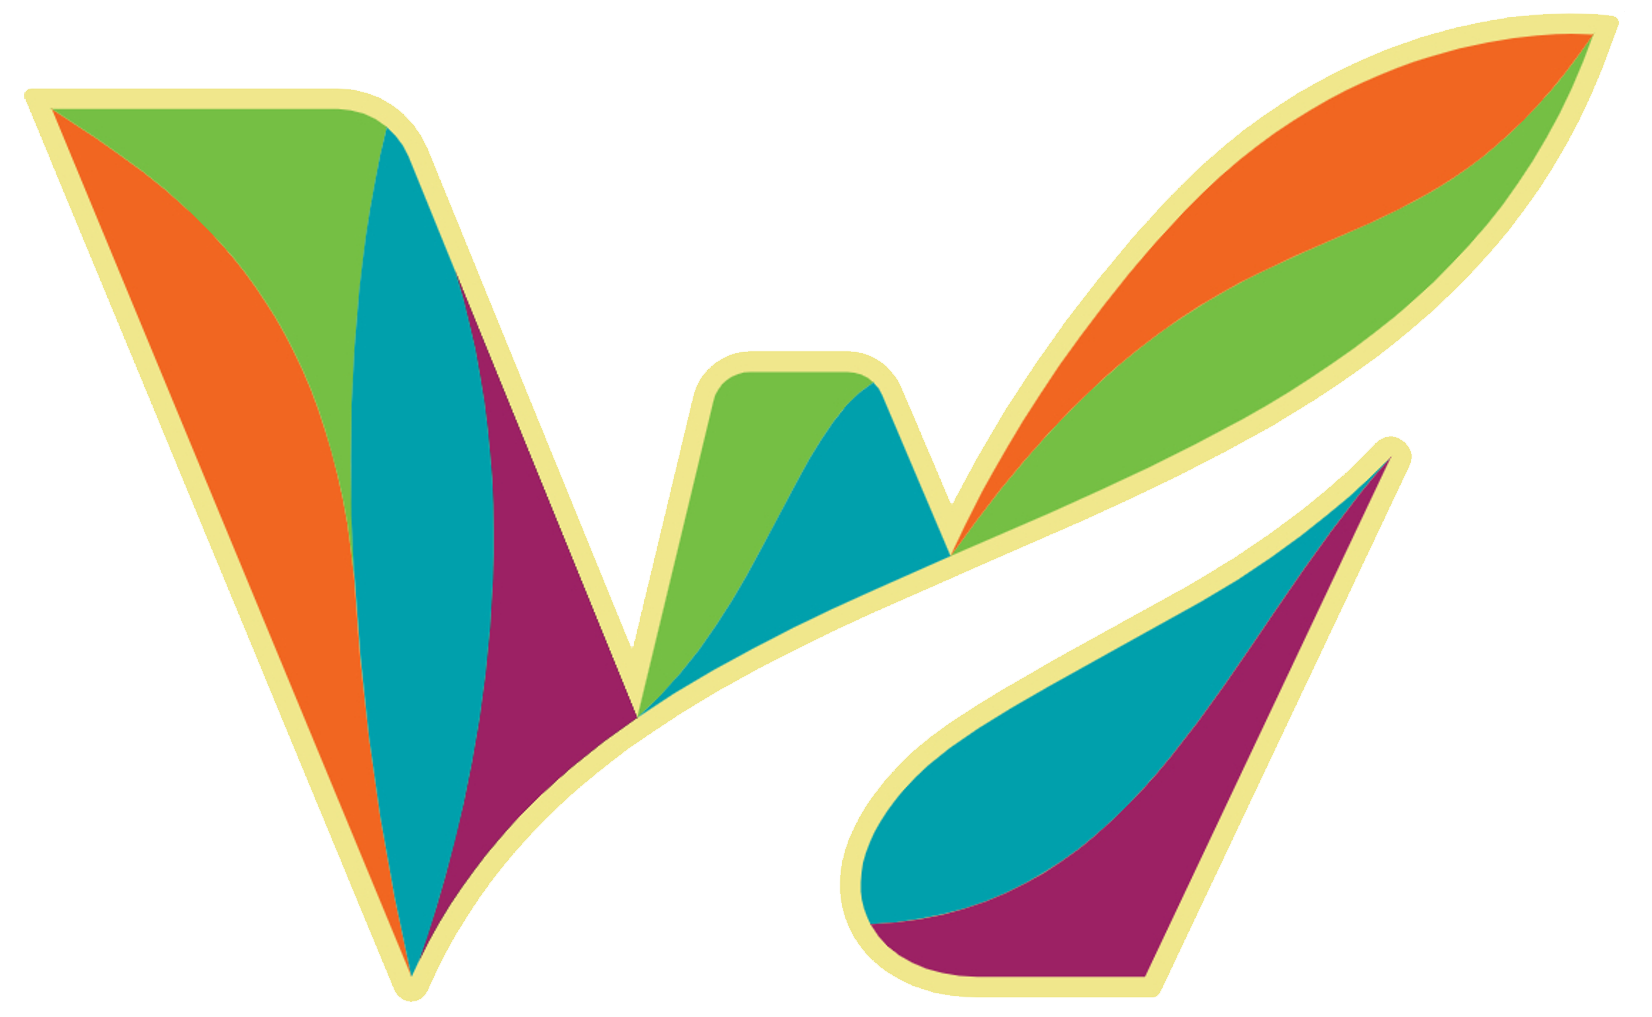 The Waterbury logo